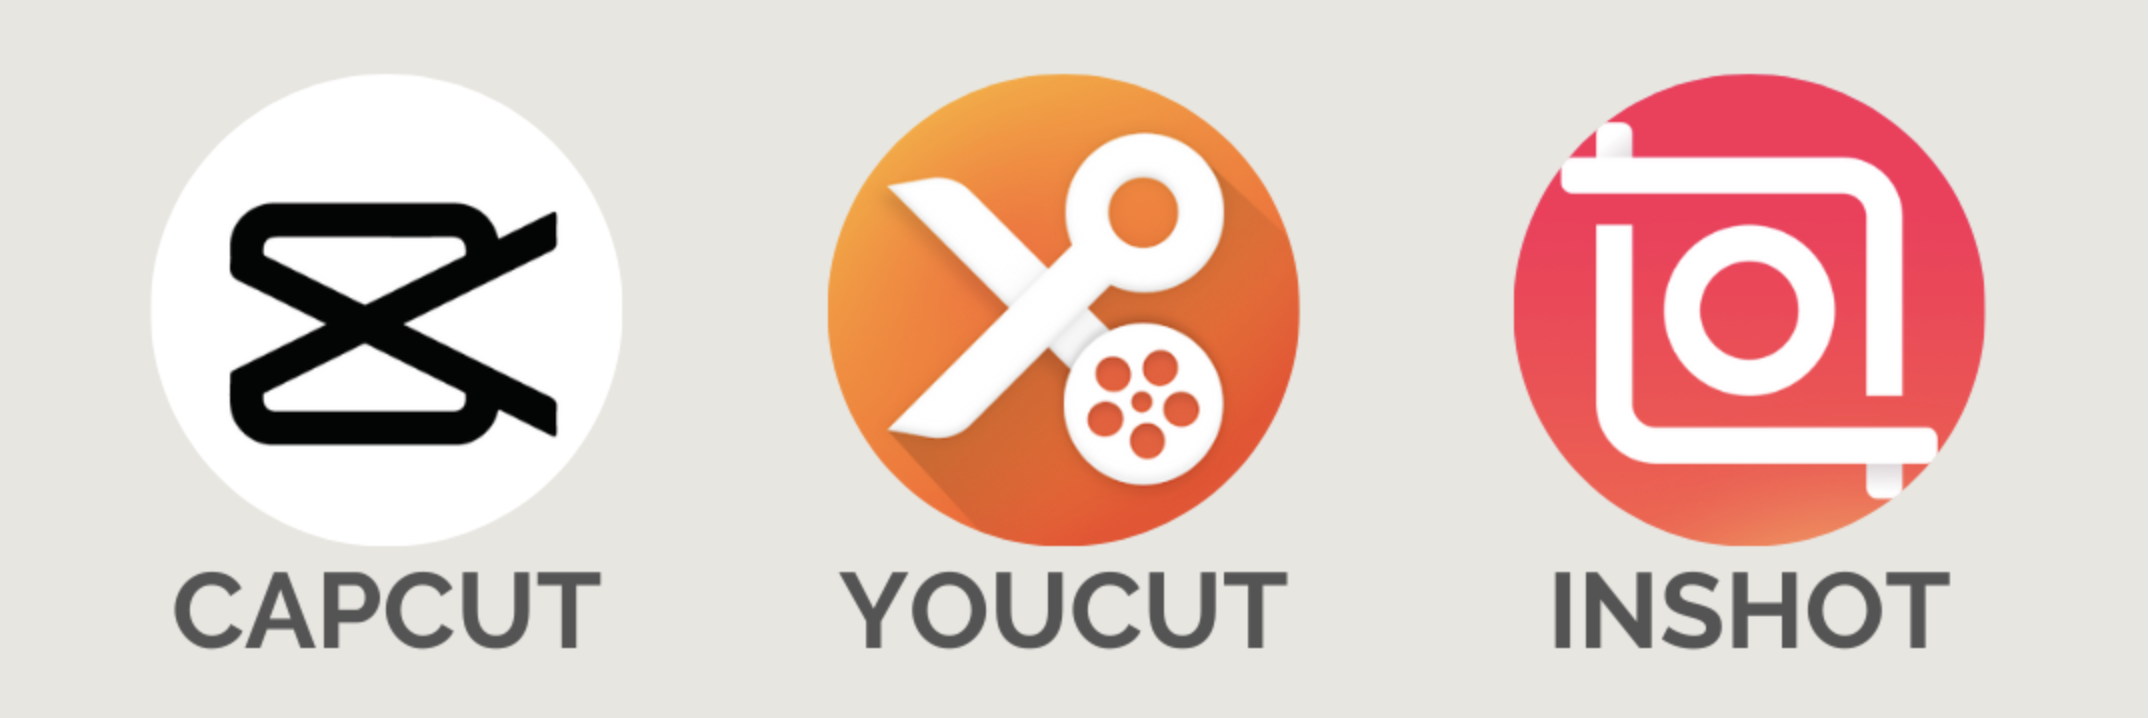 Apps gratuitas para editar vídeos capcut youcut inshot